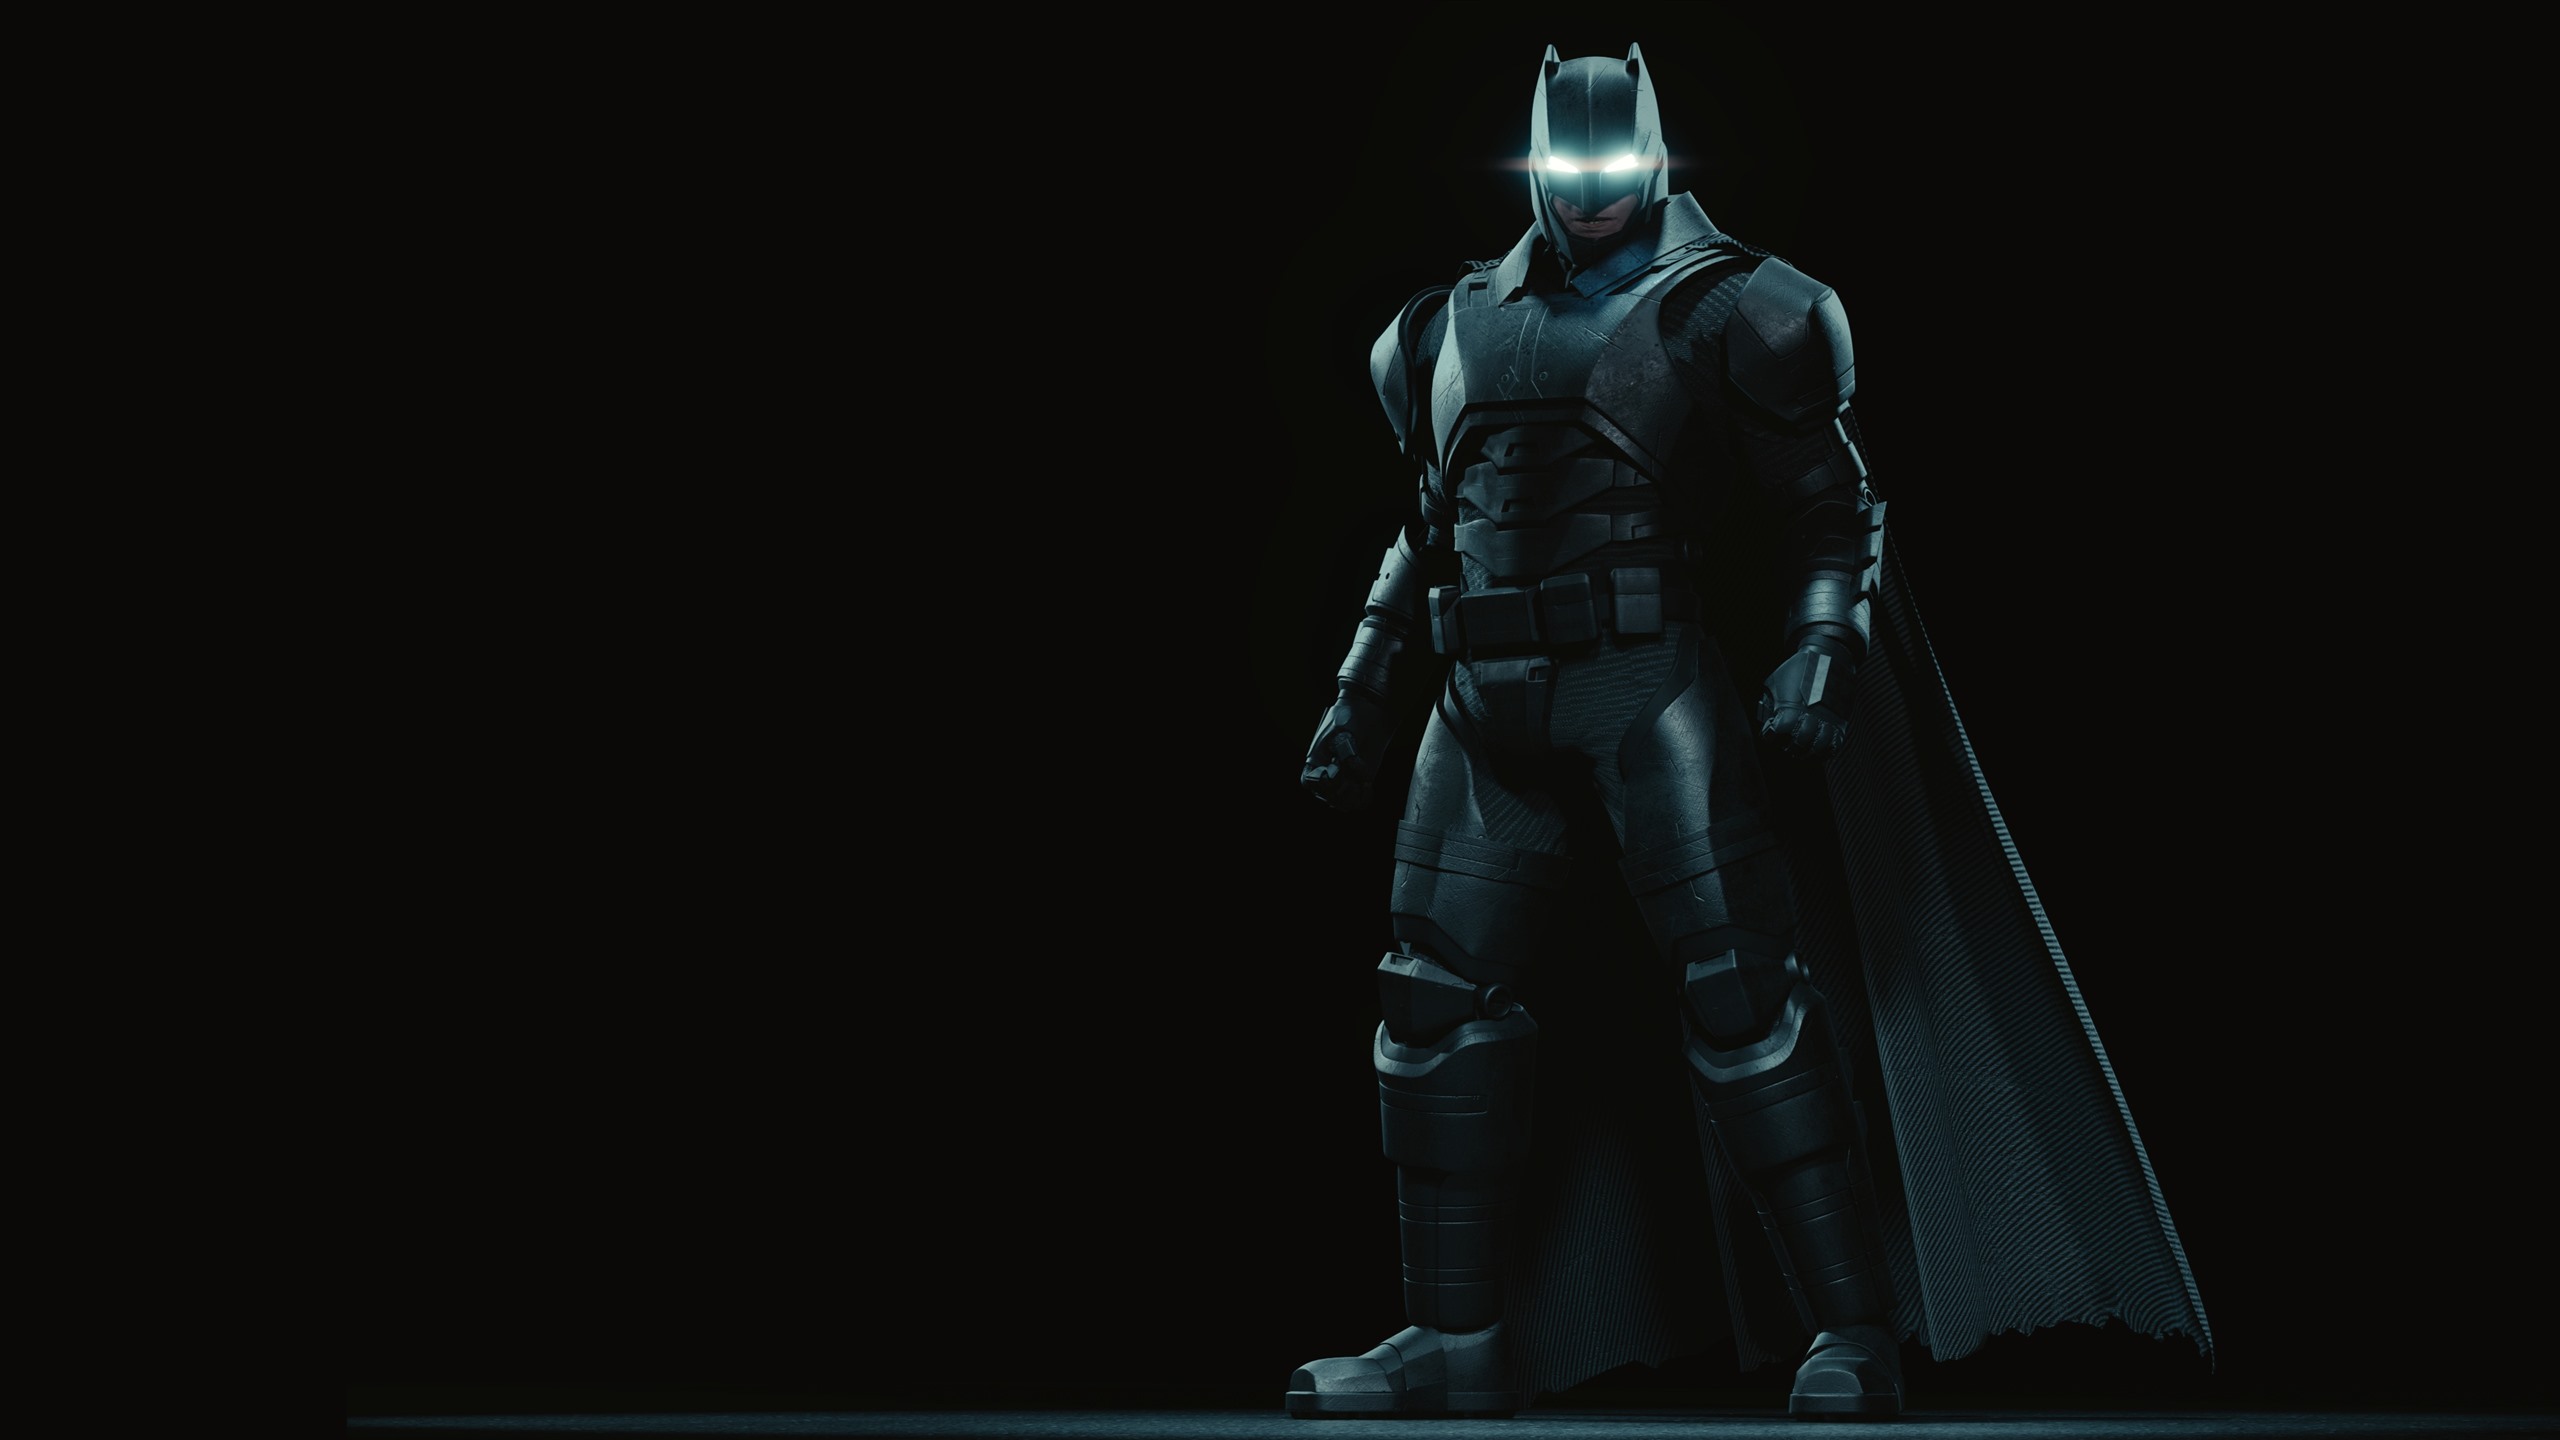 Wallpaper Batman, superhero, mask, black background 3840x2160 UHD 4K Picture, Image